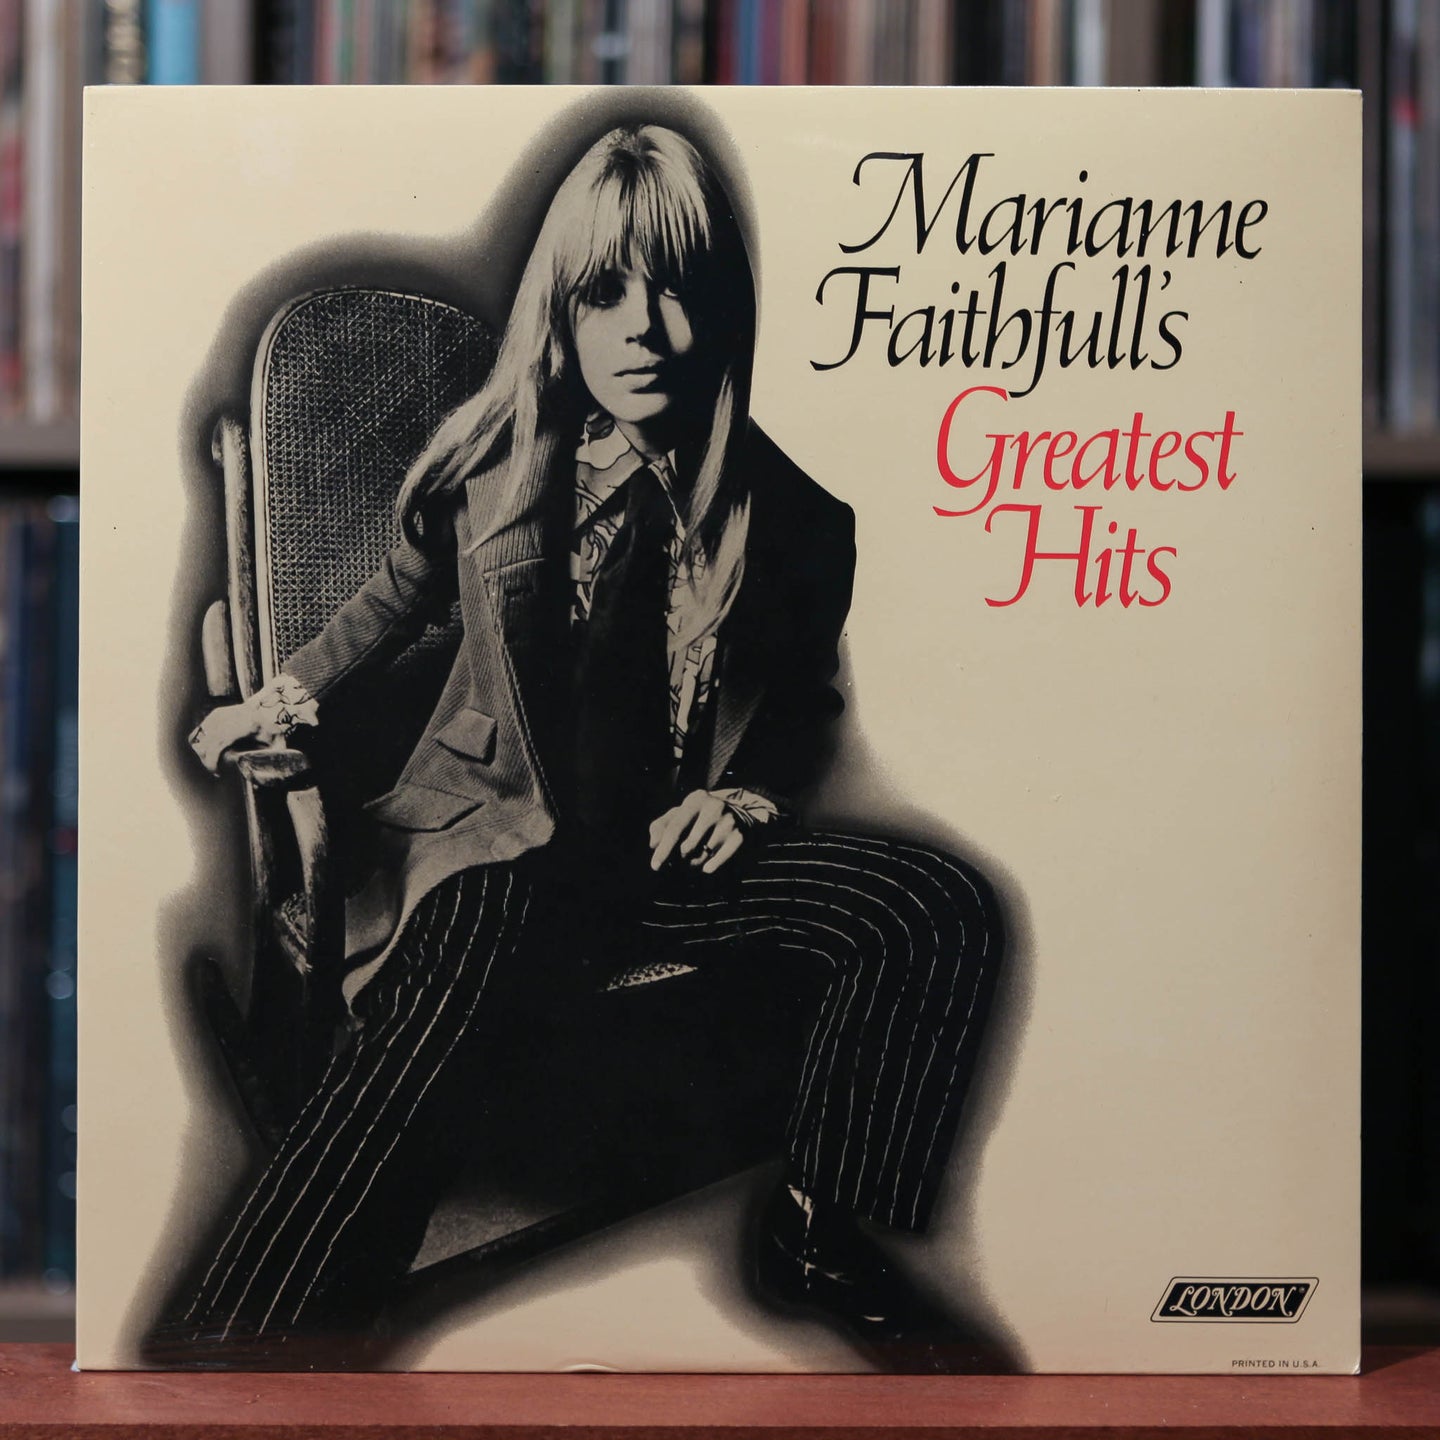 Marianne Faithfull - Marianne Faithfull's Greatest Hits - London - SEALED